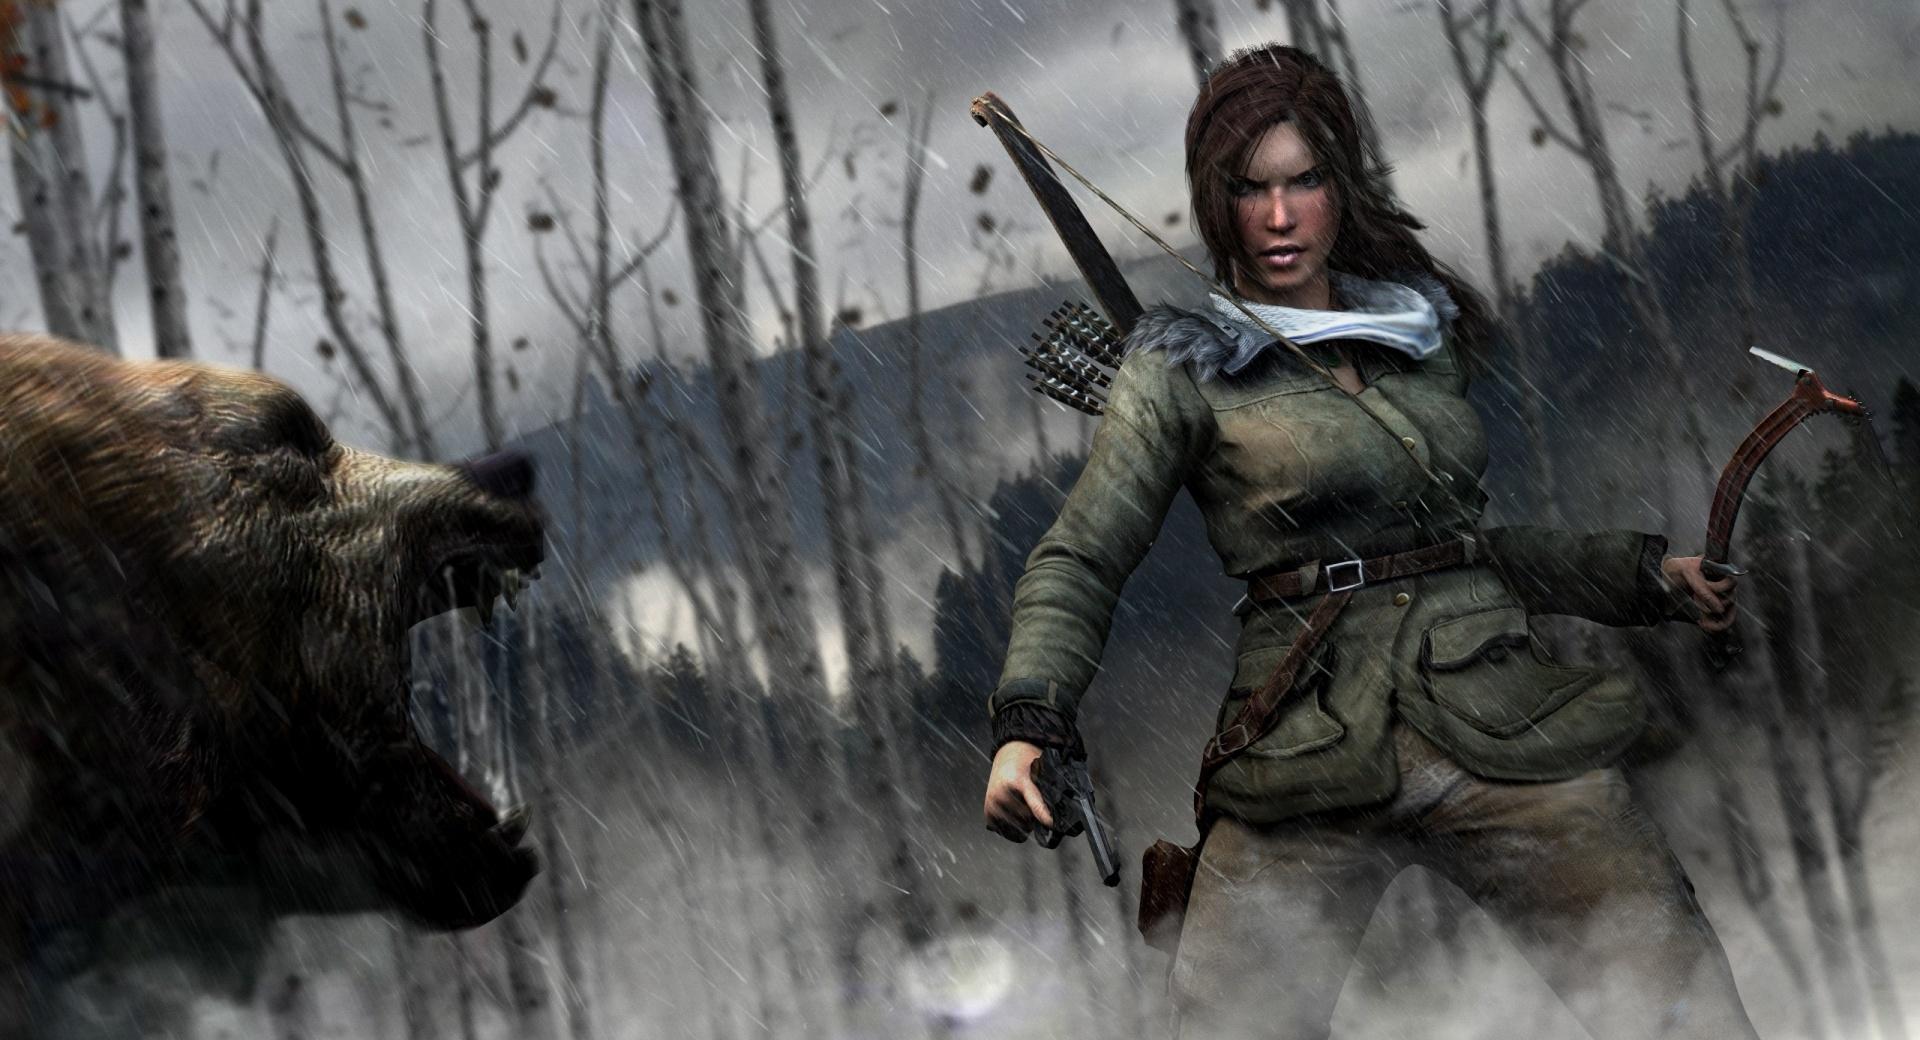 Rise of the Tomb Raider Lara Croft vs Bear at 1600 x 1200 size wallpapers HD quality